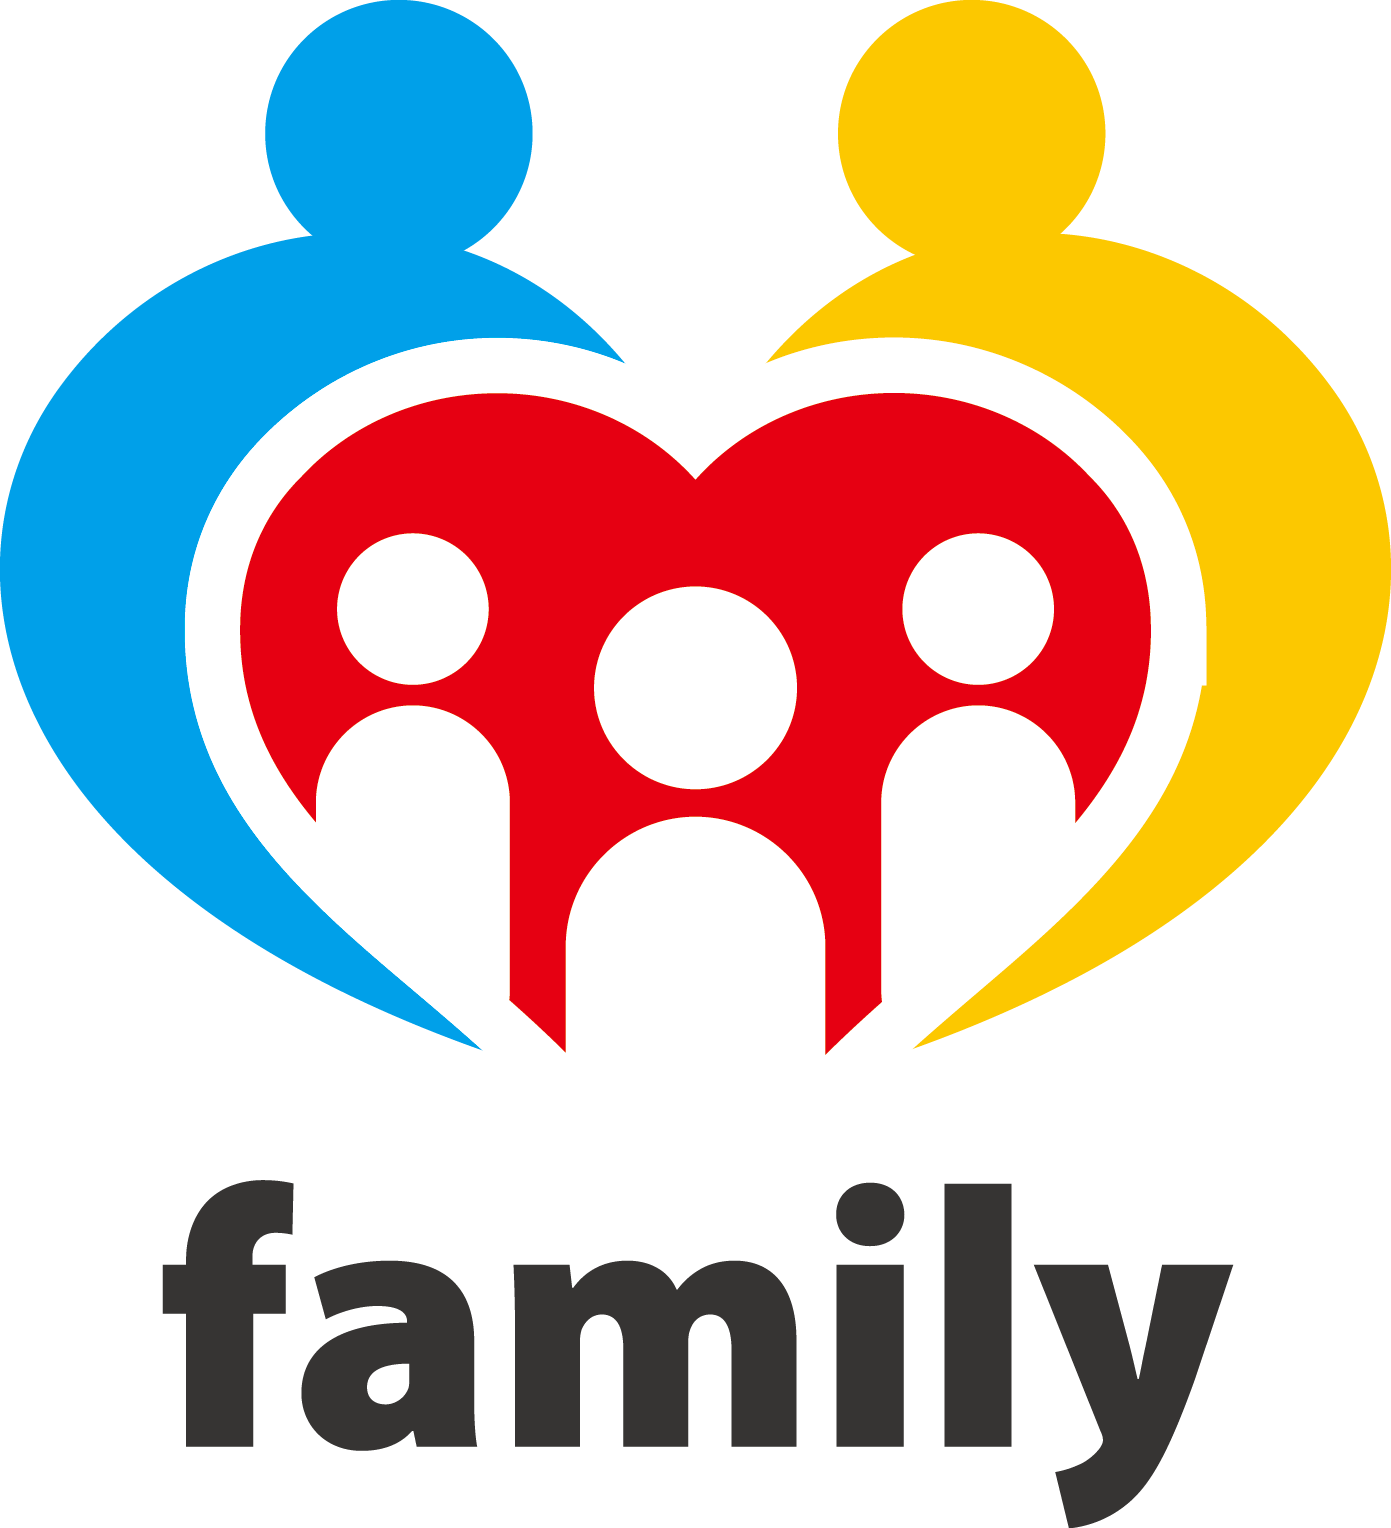 Logo Family Royalty-free Freeform - Every Child Deserves A Family (1391x1528)